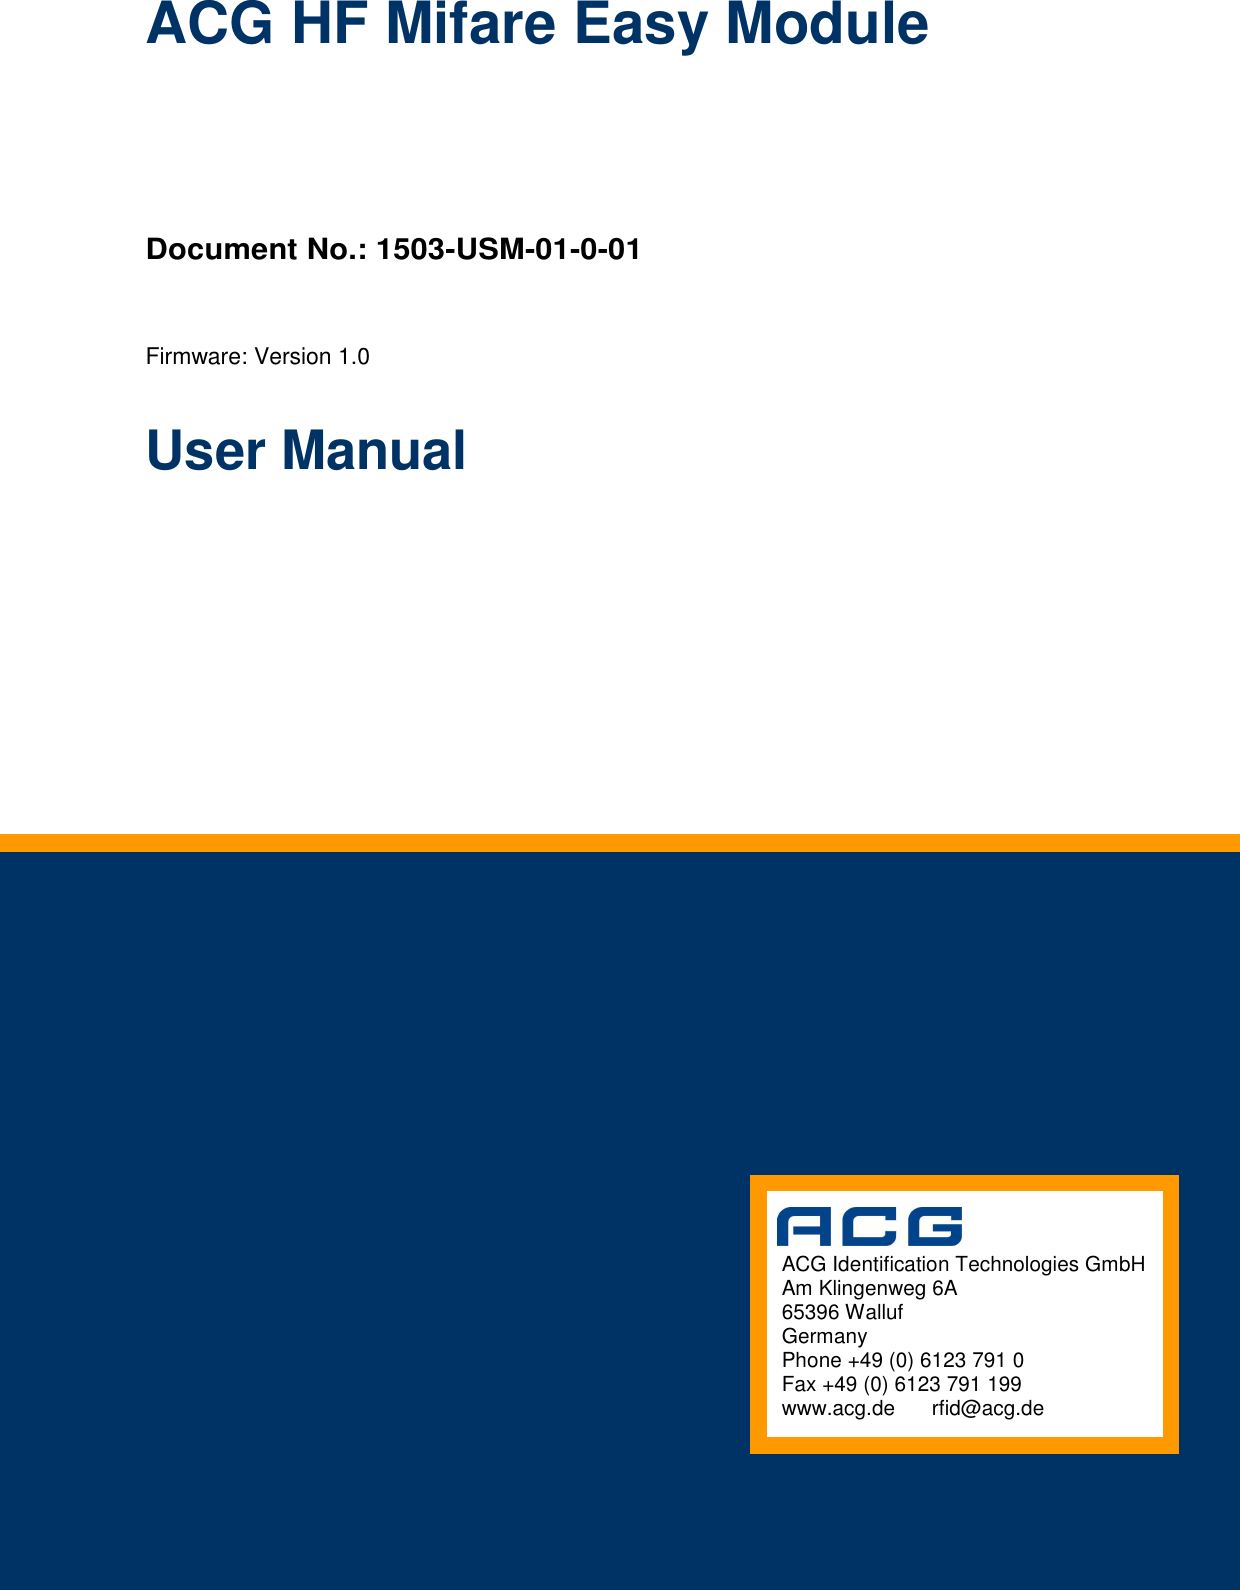 Document Nr.: QSI-040902-OM-1-a-UserManual Dual ISO Module, V2.0             ACG Identification Technologies GmbH Am Klingenweg 6A 65396 Walluf Germany Phone +49 (0) 6123 791 0 Fax +49 (0) 6123 791 199 www.acg.de   rfid@acg.de ACG HF Mifare Easy Module Document No.: 1503-USM-01-0-01 Firmware: Version 1.0 User Manual  